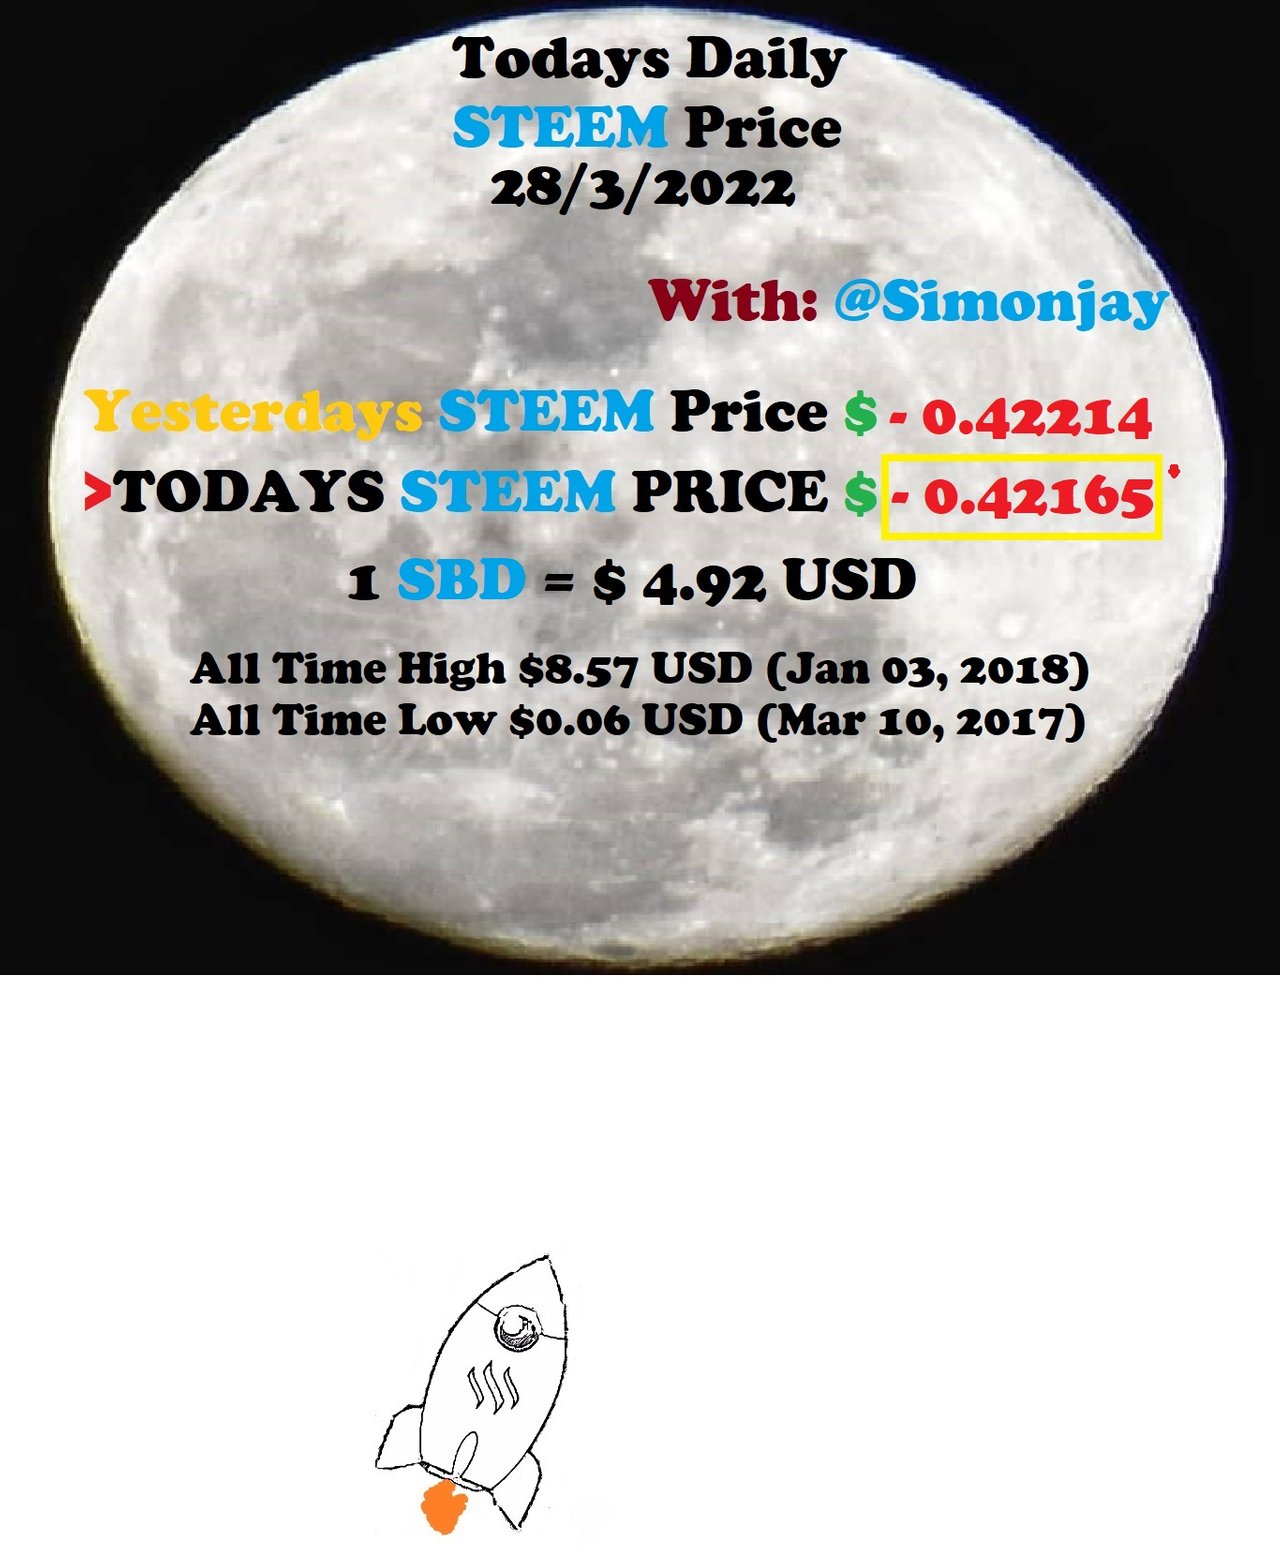 Steem Daily Price MoonTemplate28032022.jpg